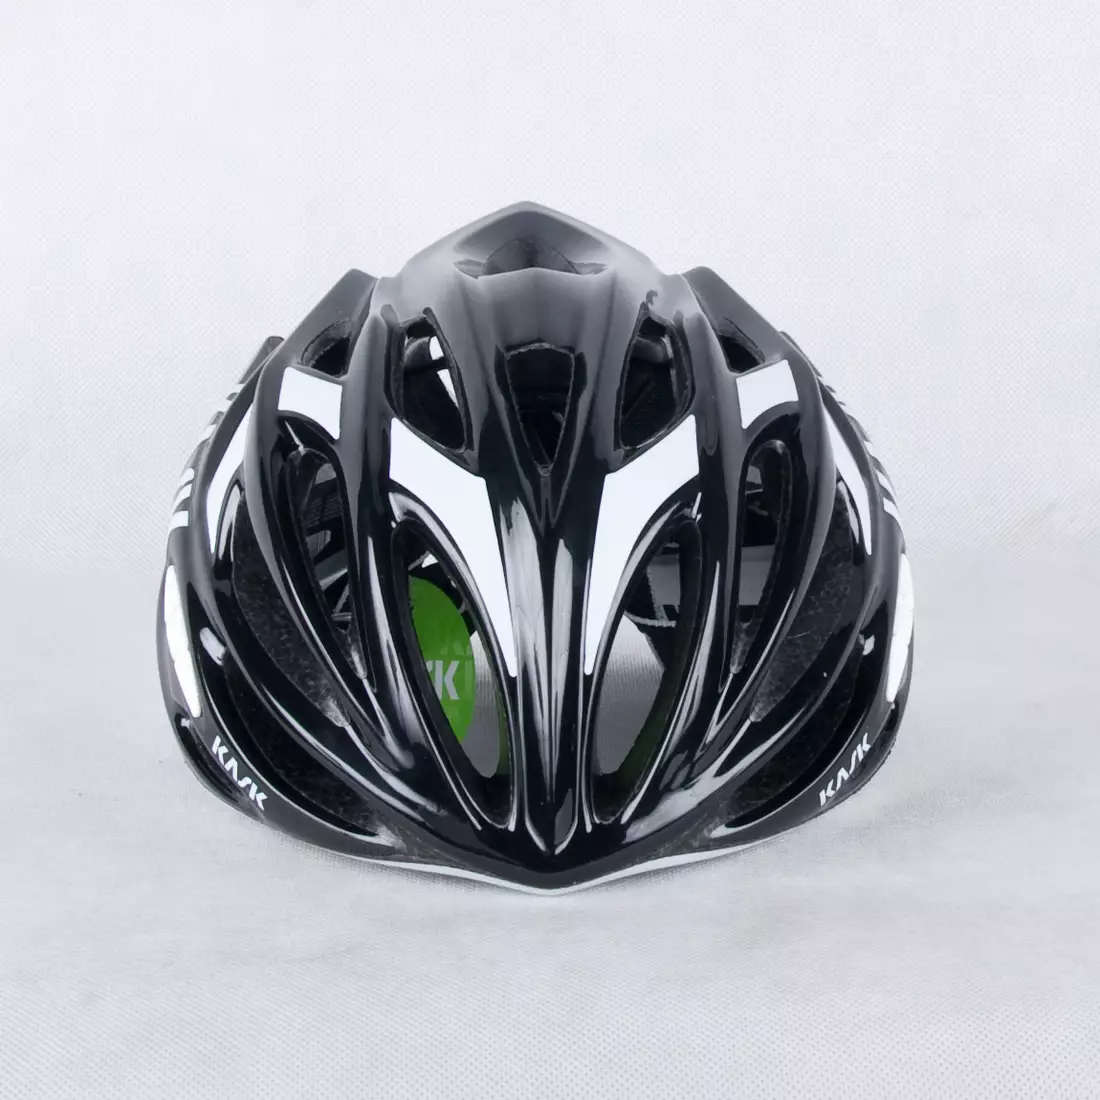 MOJITO HELMET - bicycle helmet CHE00044.240 Nero-Bianco